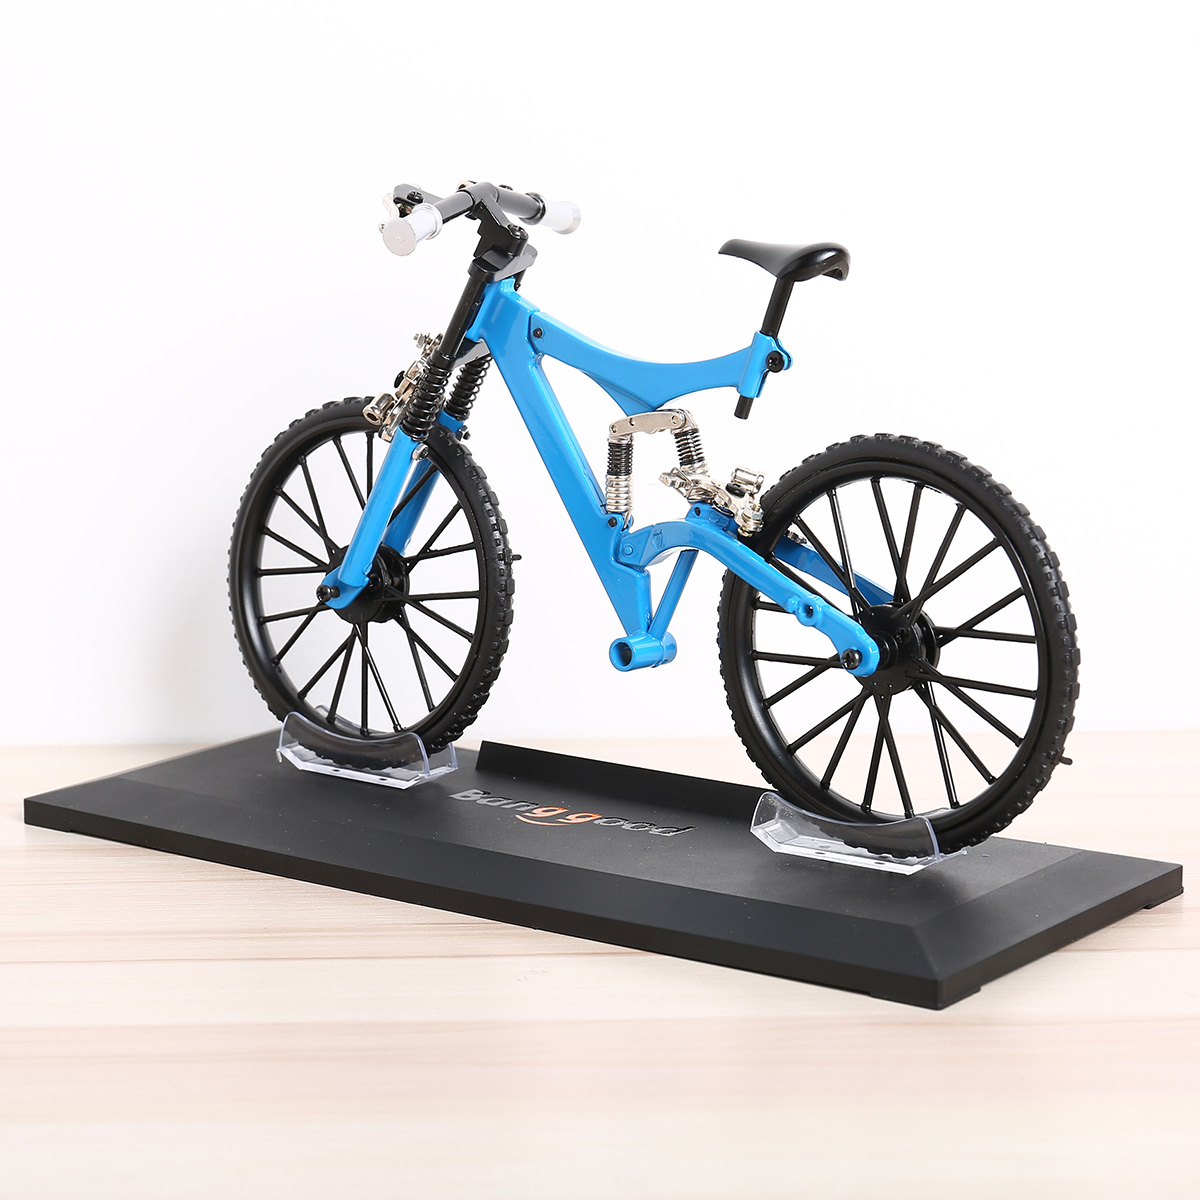 Banggood-Bicycle-Model-Simulation-DIY-Alloy-MountainRoad-Bicycle-Set-Decoration-Gift-Model-Toys-979545-2